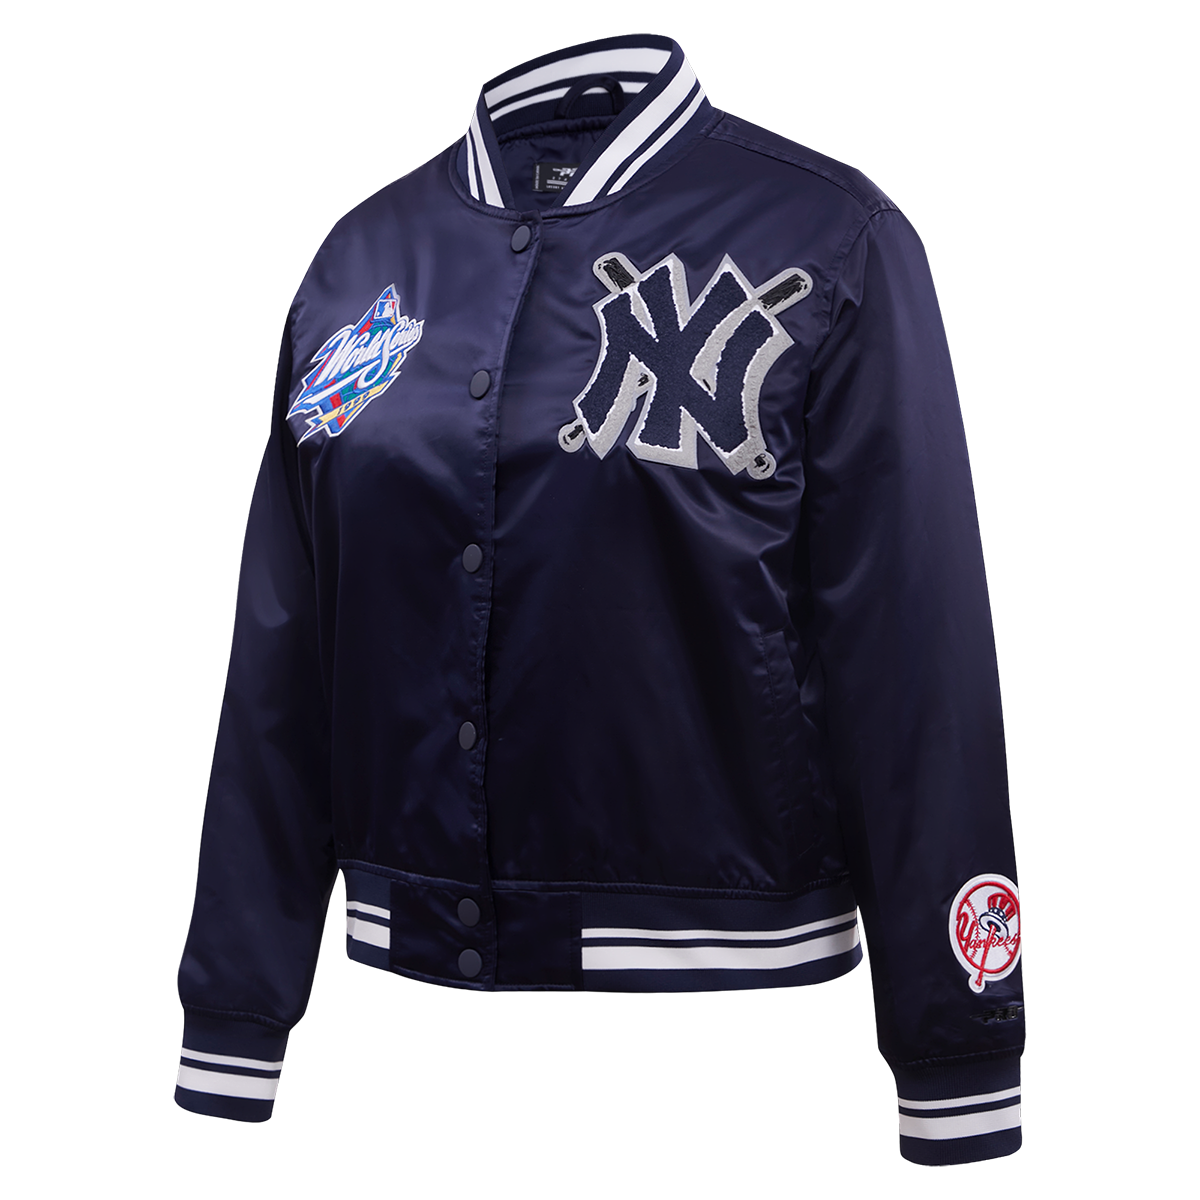 Yankees Baseball Jacket – Vintage Fabrik